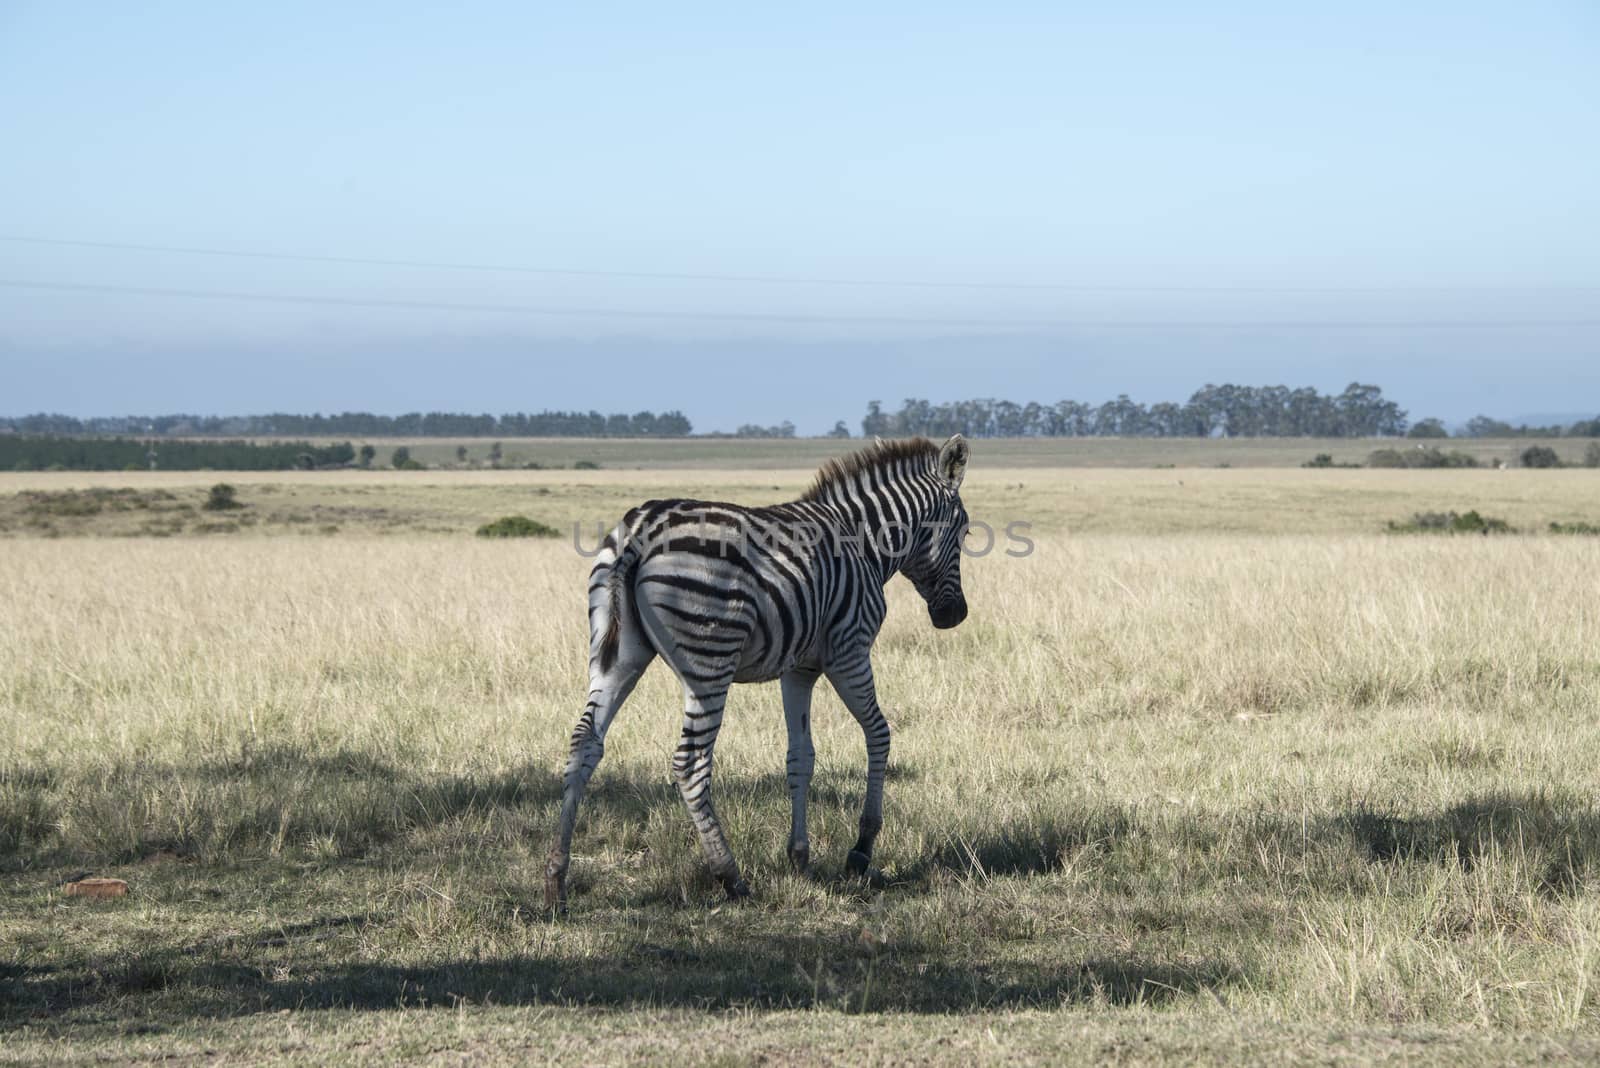 A young zebra walking across a plain, South Africa